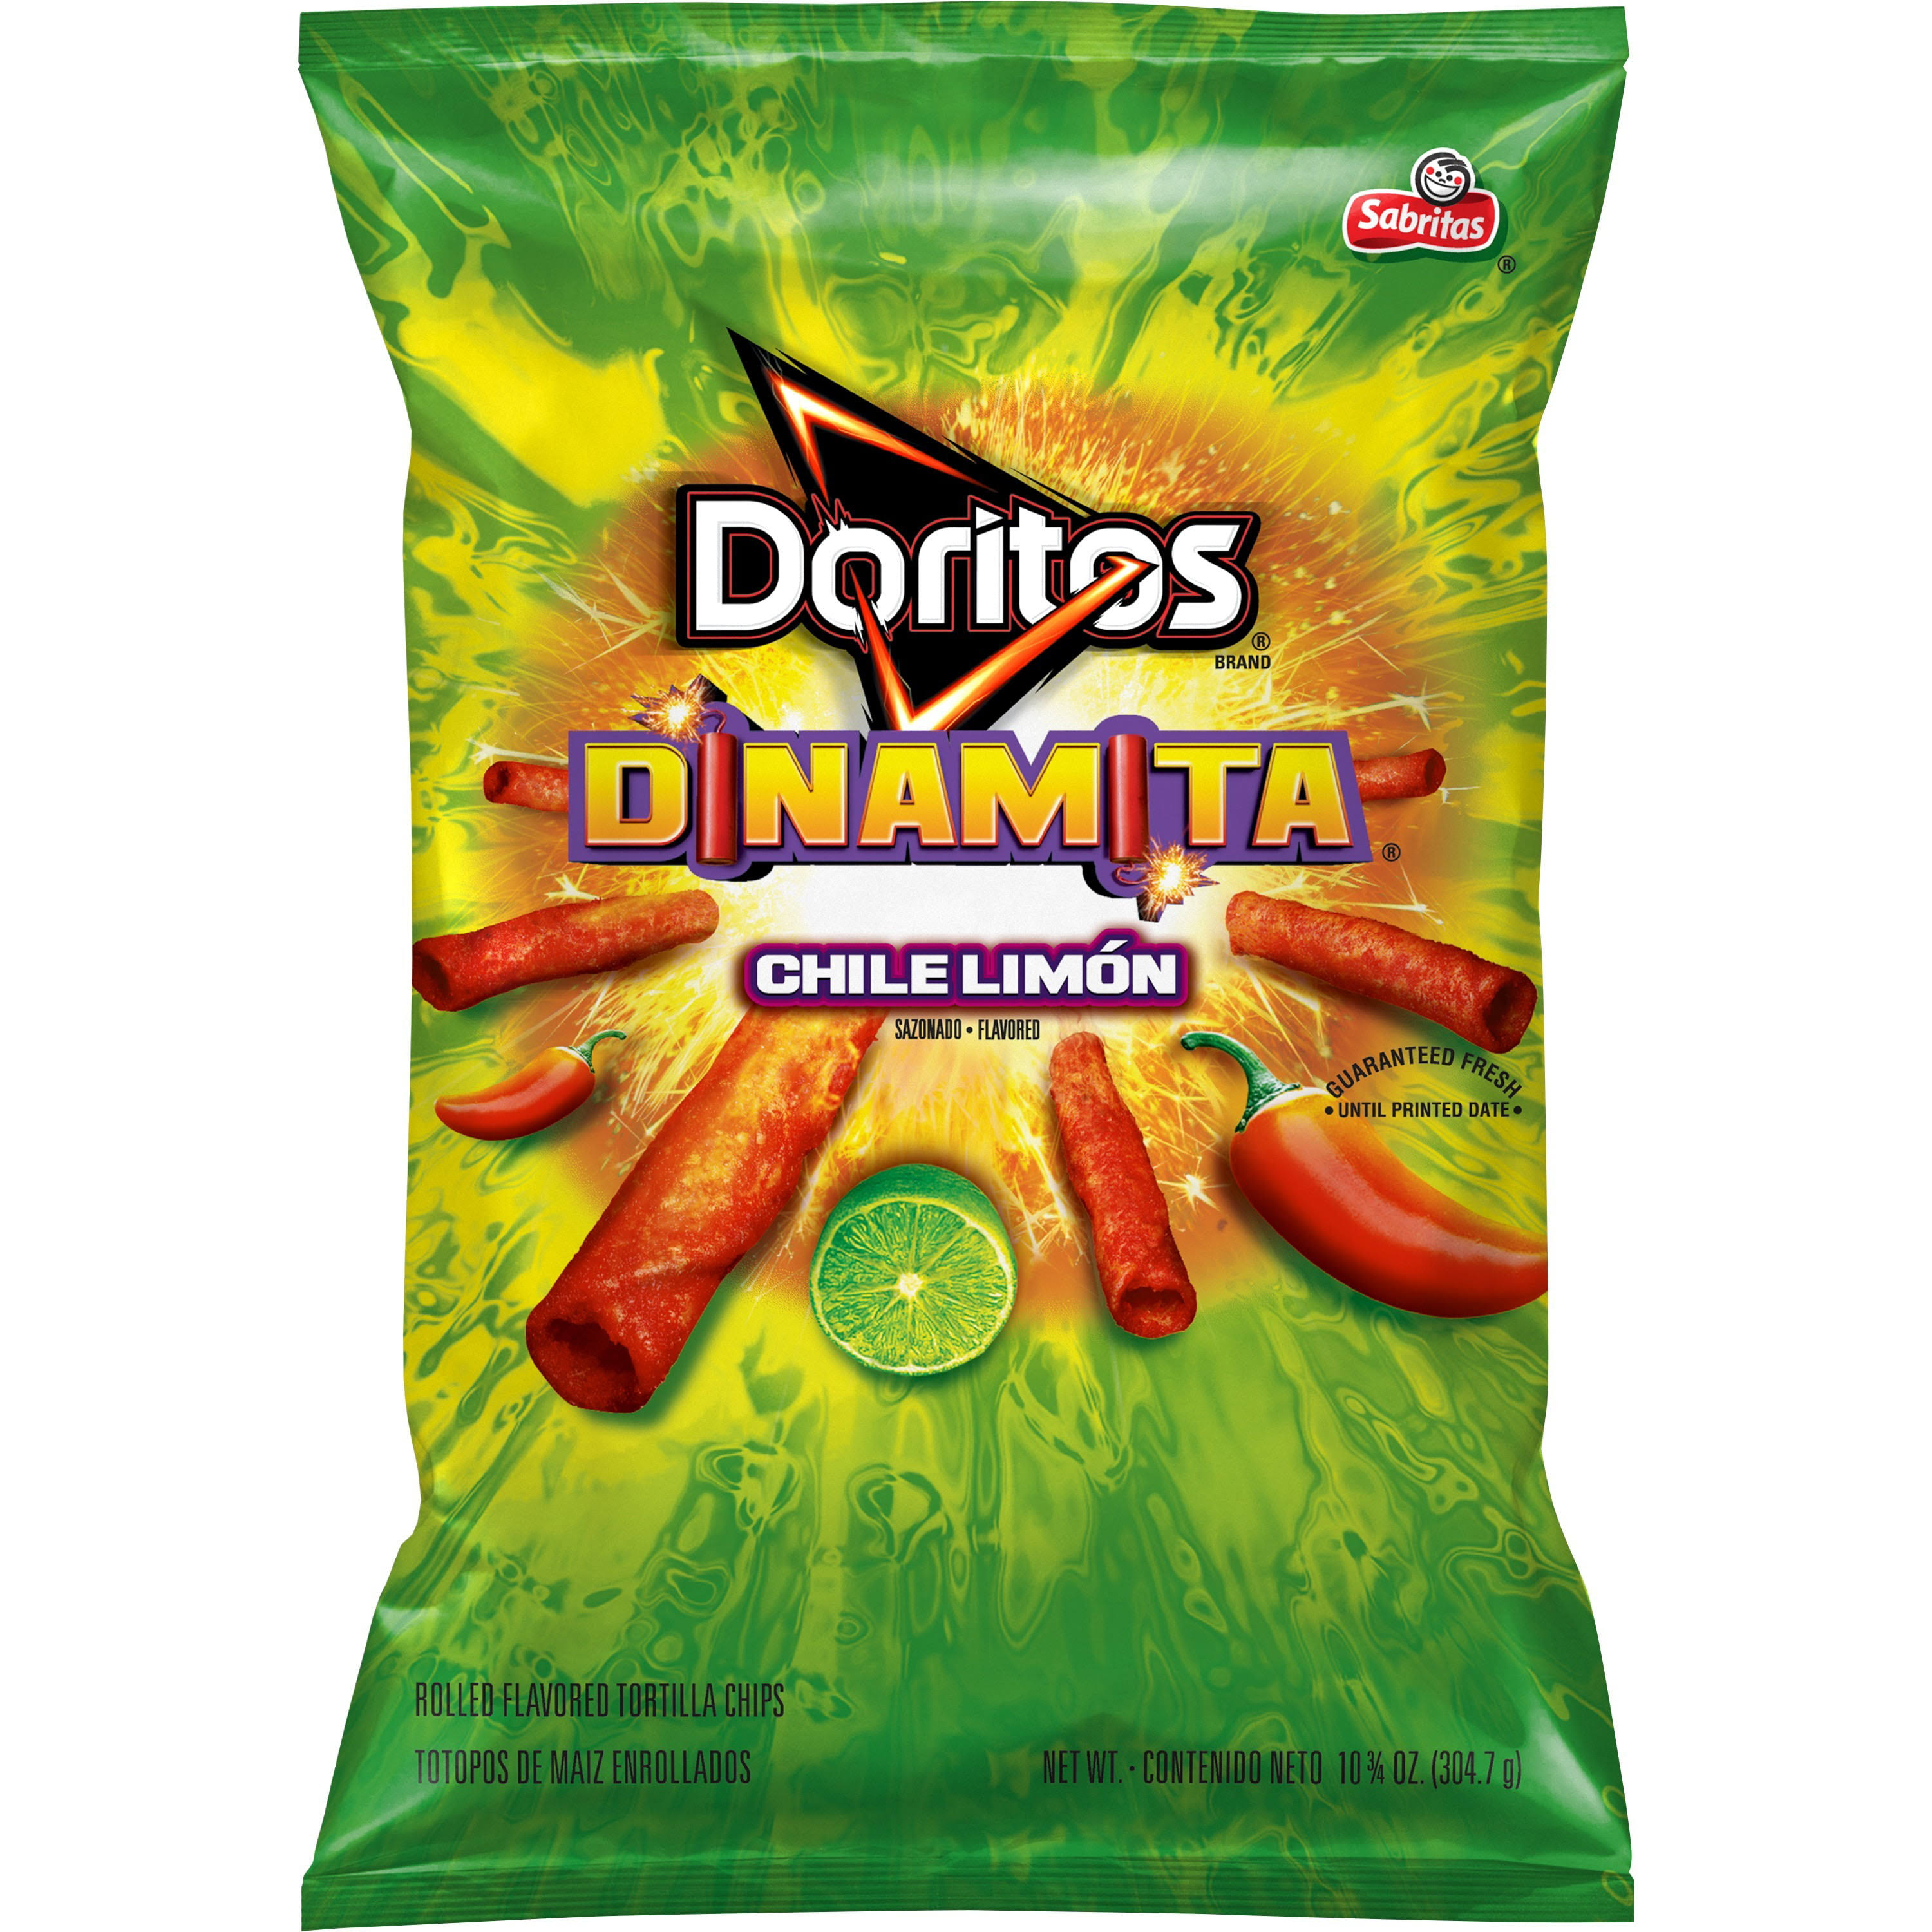 Doritos Tortilla Chips Dinamita Chile Limon Bag, Chili Lemon, 10.75 ou